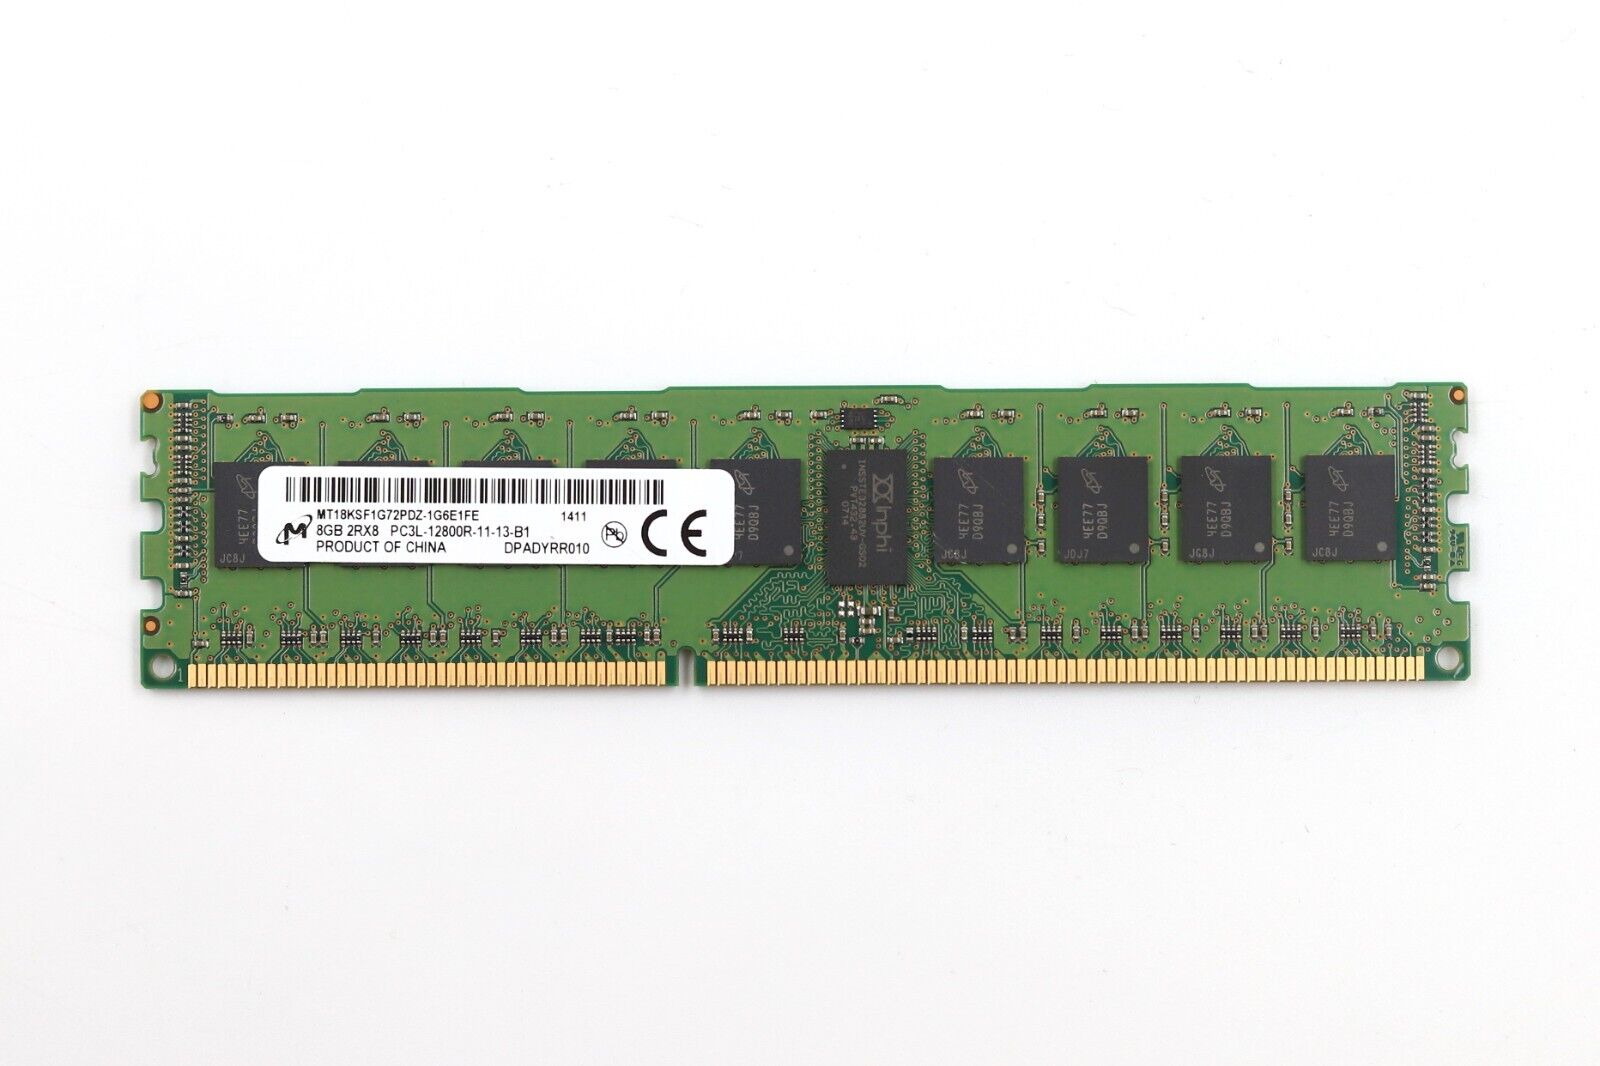 Micron 8GB 2RX8 PC3L-12800R-11-13-B1 ECC REG Server RAM MT18KSF1G72PDZ-1G6E1FE